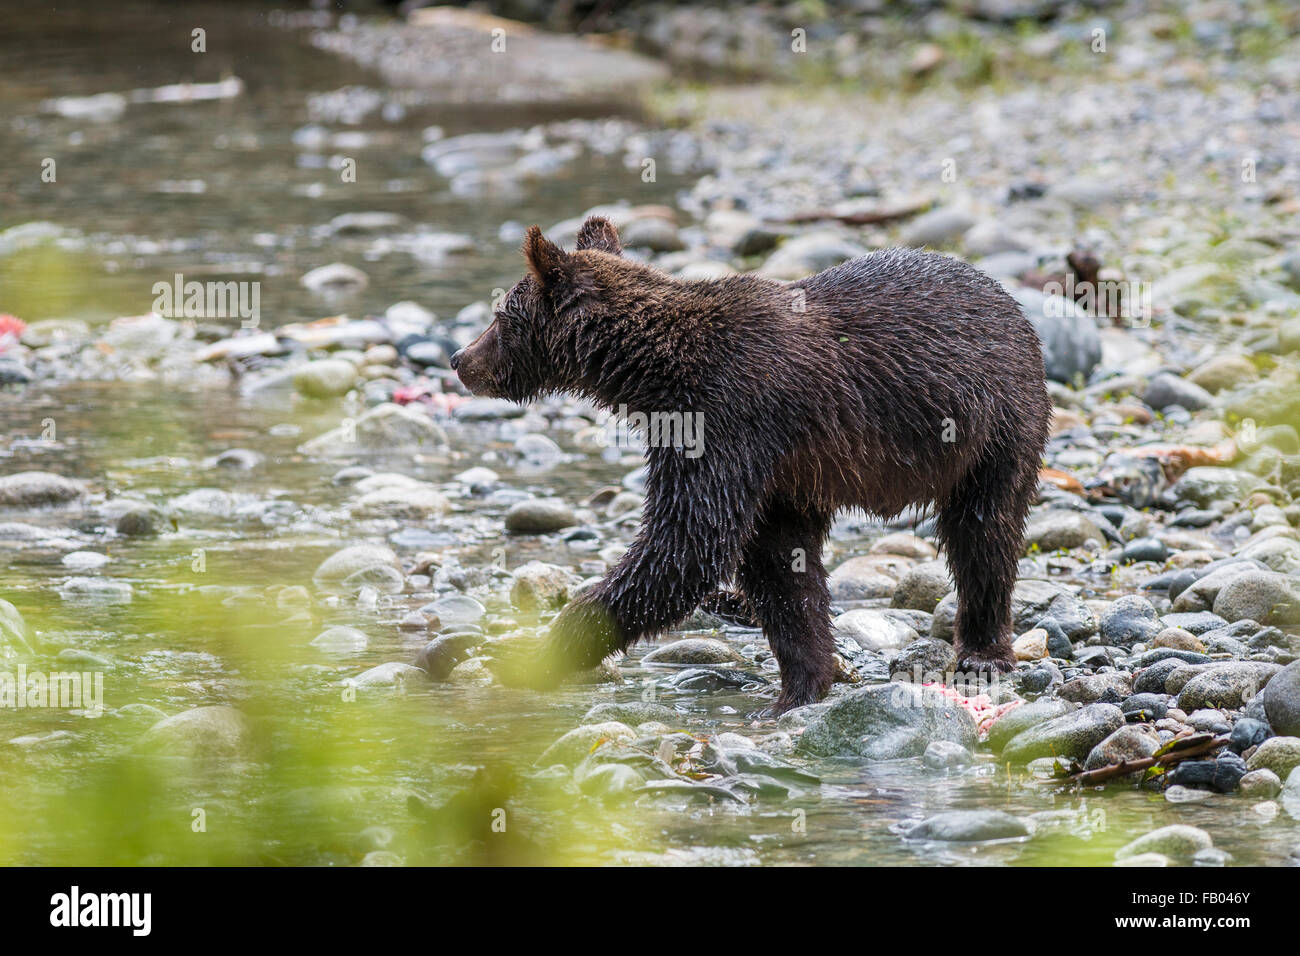 Grizzlybär (Ursus arctos horribilis), Jungtier, mit Lachs, fressend, Bute Inlet, Vanvouver Island, British Columbia, Kanada, Nor Stock Photo